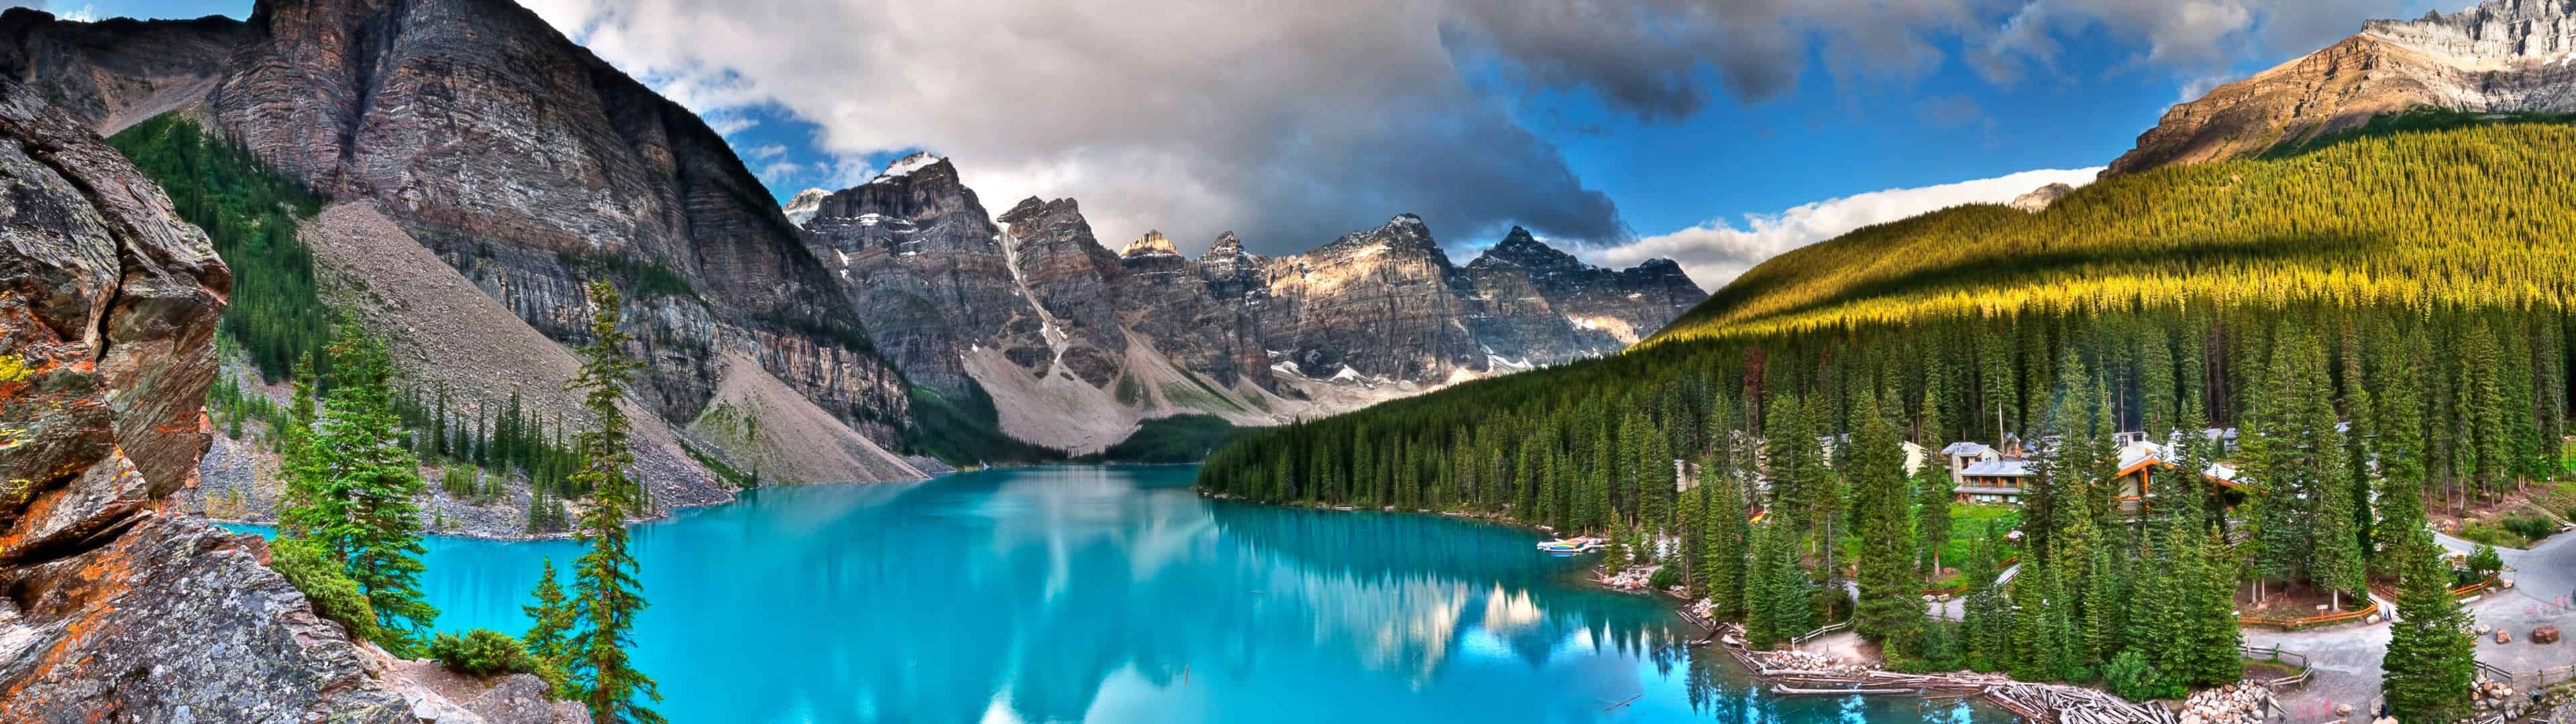 Banff National Park, Moraine Lake, Canada, Dual monitor, 3840x1080 Dual Screen Desktop